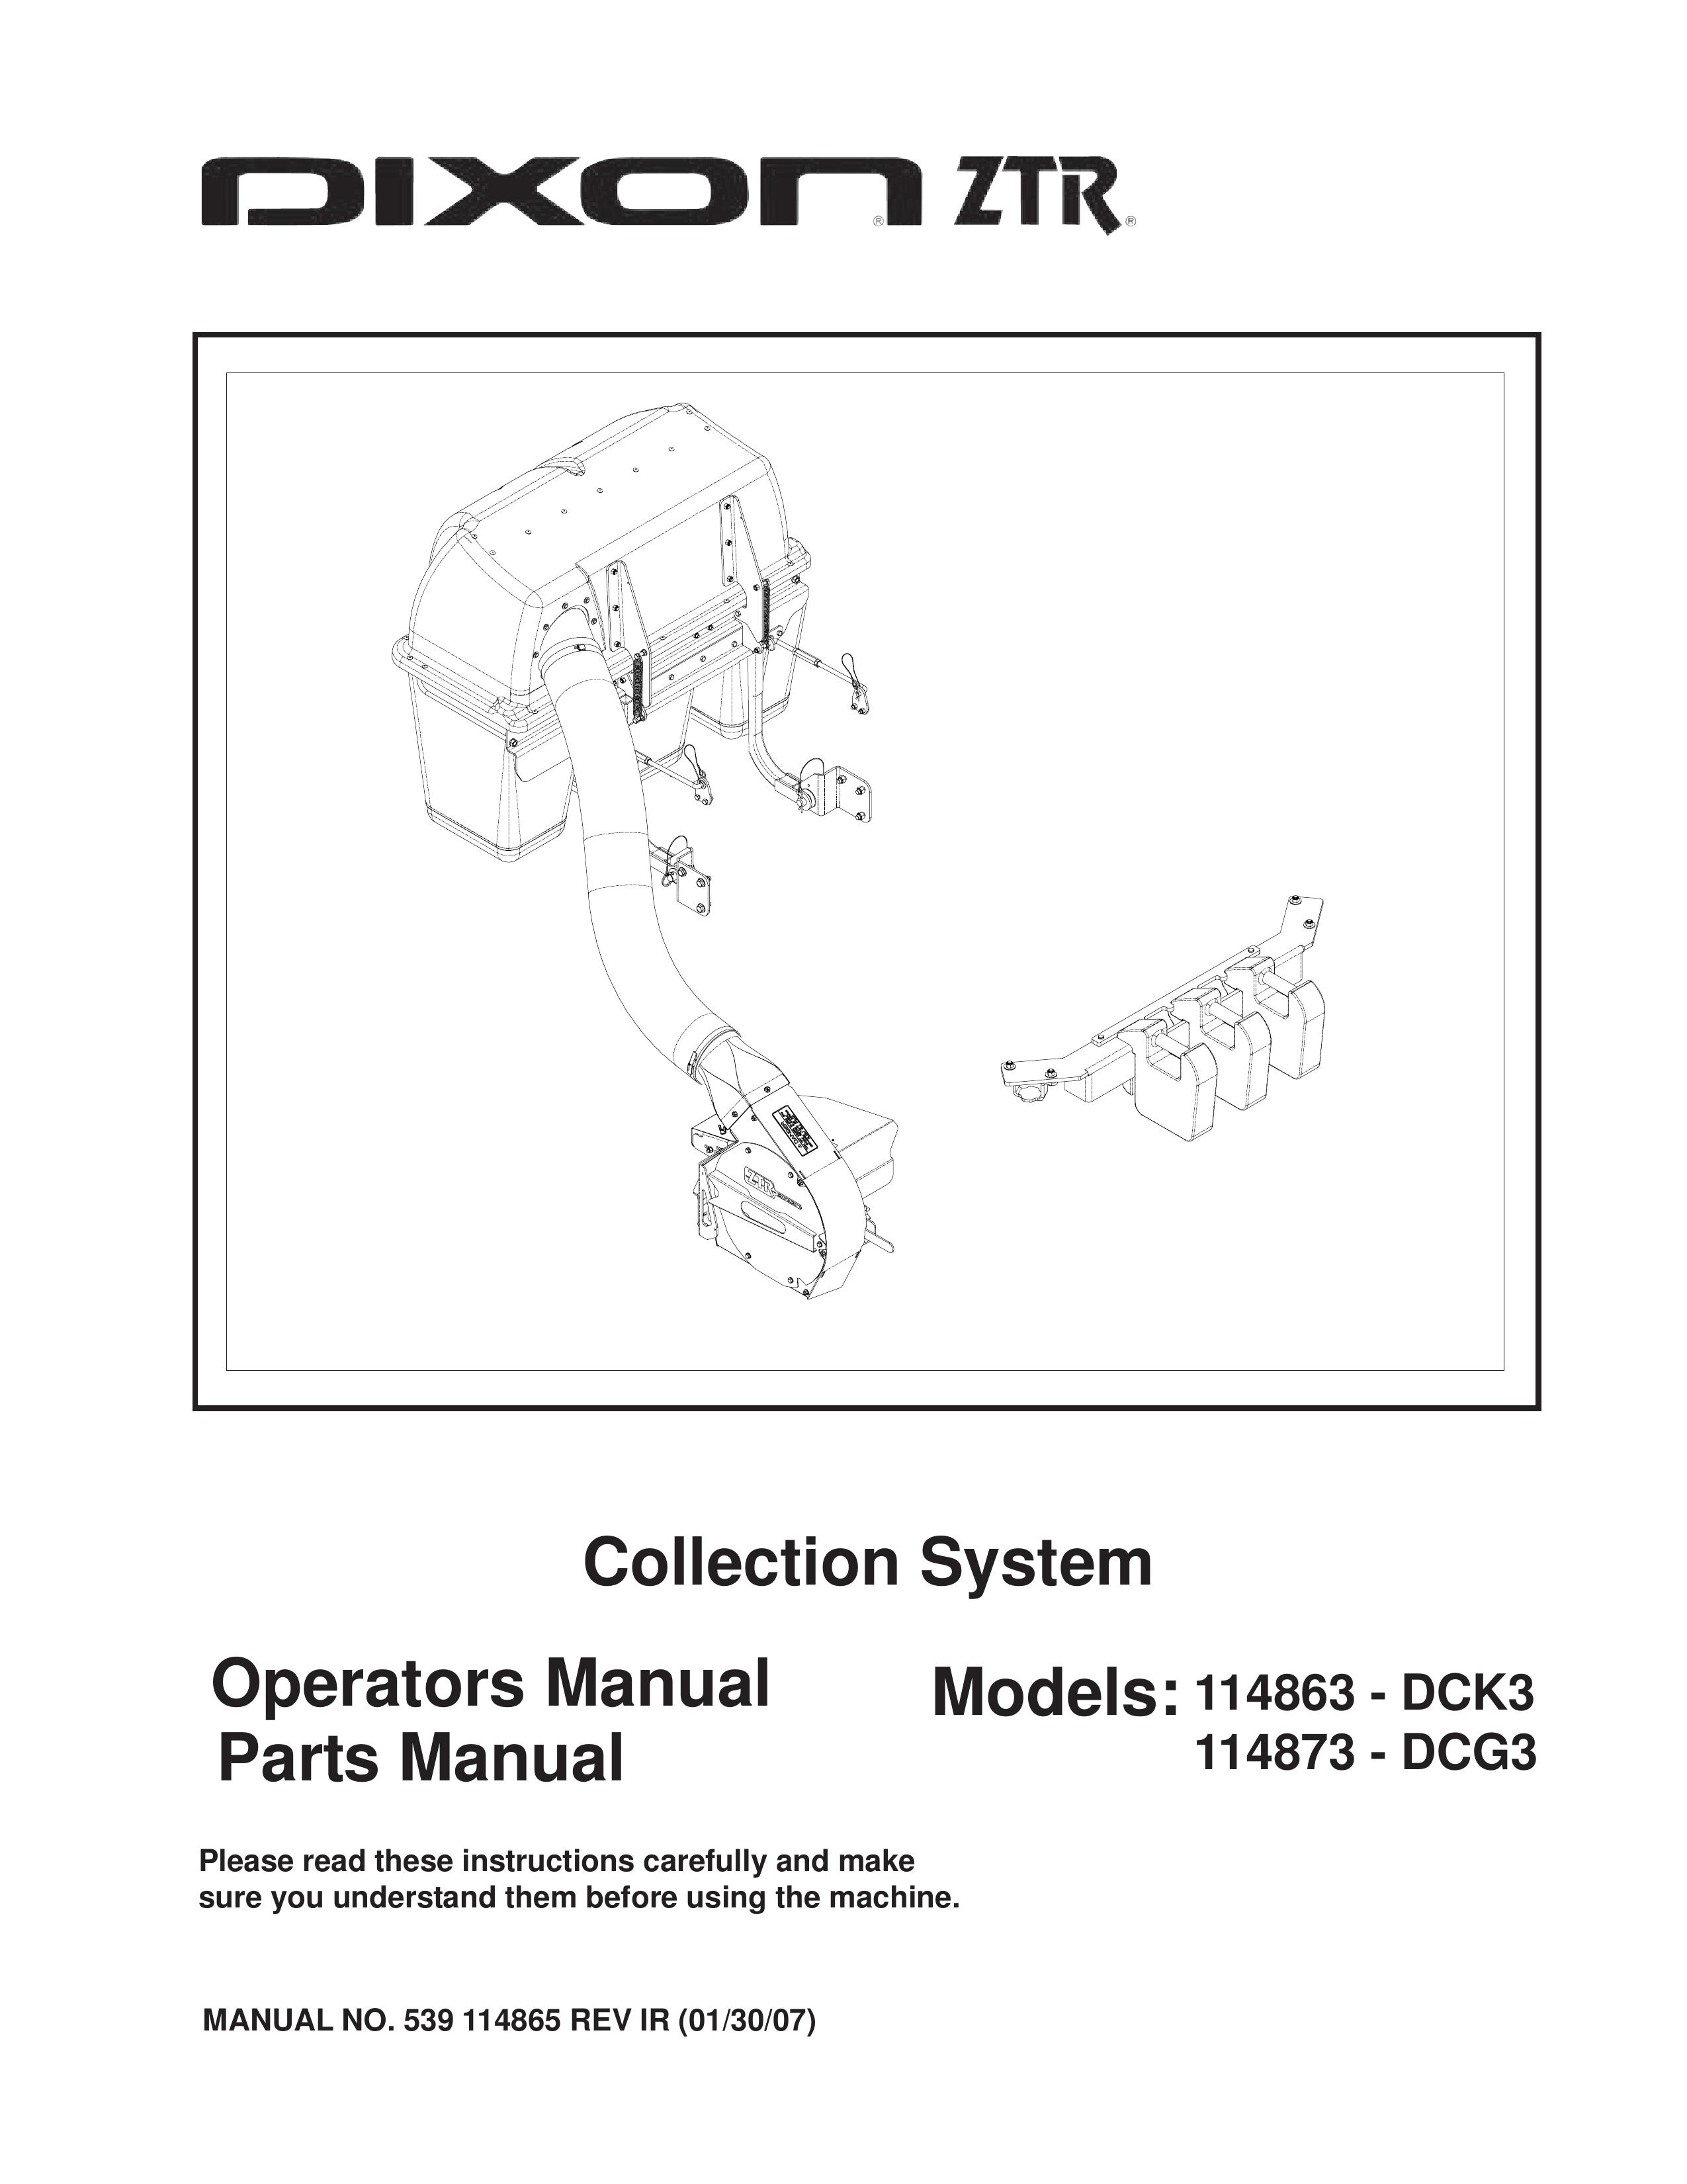 Dixon 114873 - DCG3 Lawn Mower User Manual